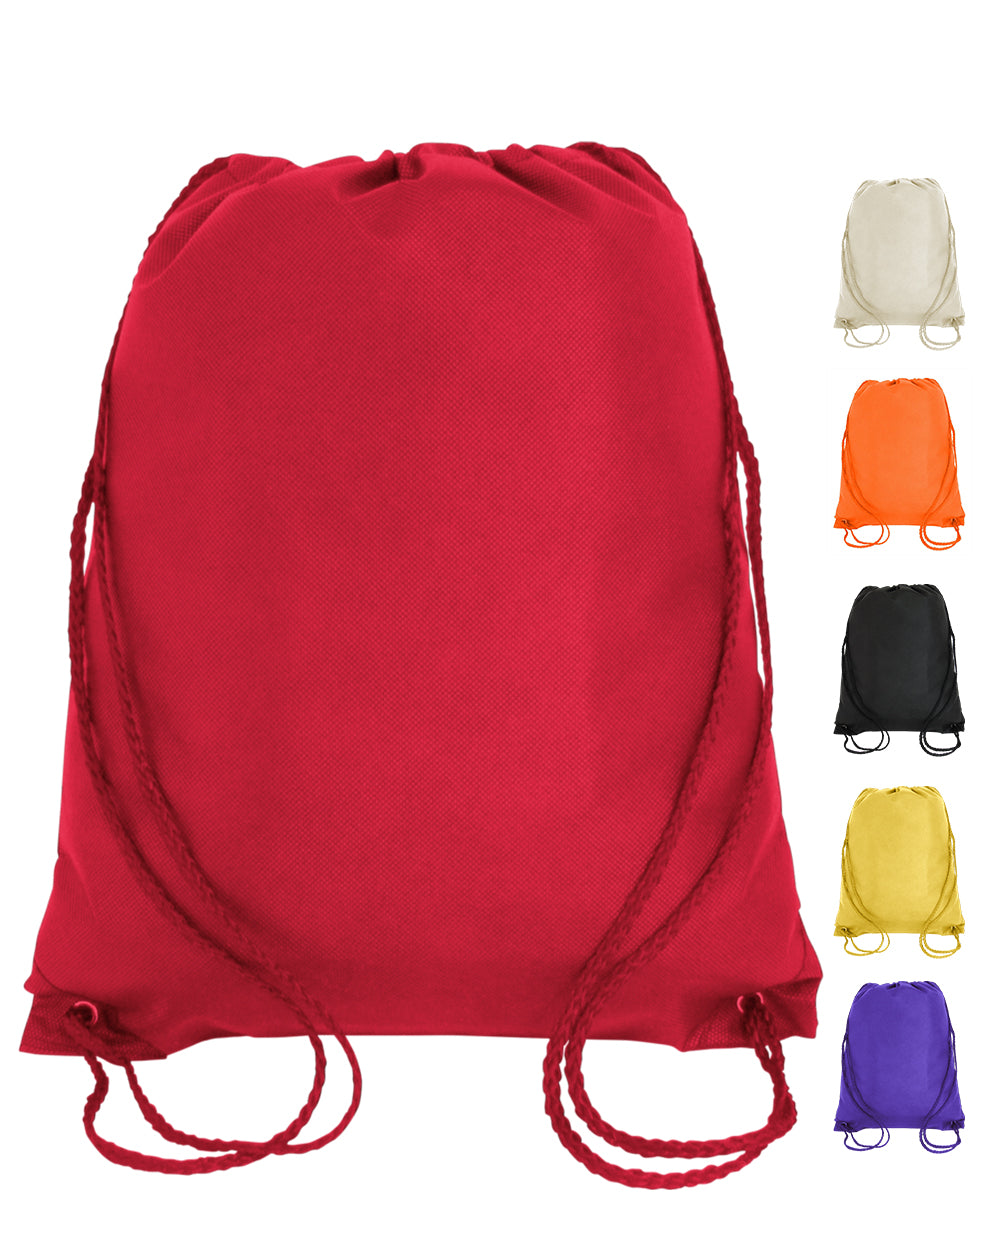 Kids Drawstring Bags,Wholesale Cinch Packs Junior,Cheap drawstring bag